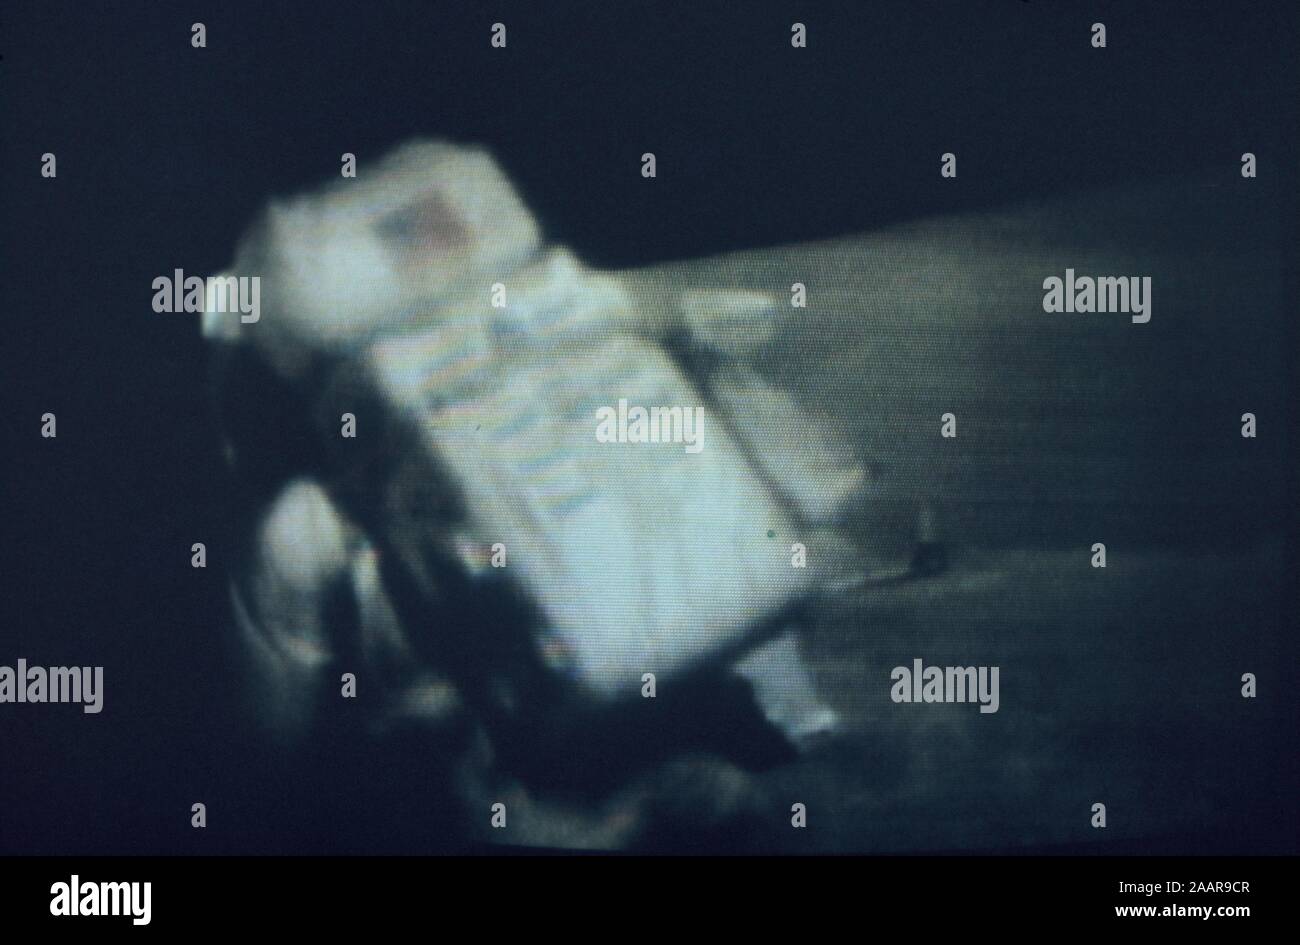 Teleclip - Buzz Aldrin stumbles on Moon surface - Apollo 11 photo taken during live broadcast/s circa 1969-72 Stock Photo